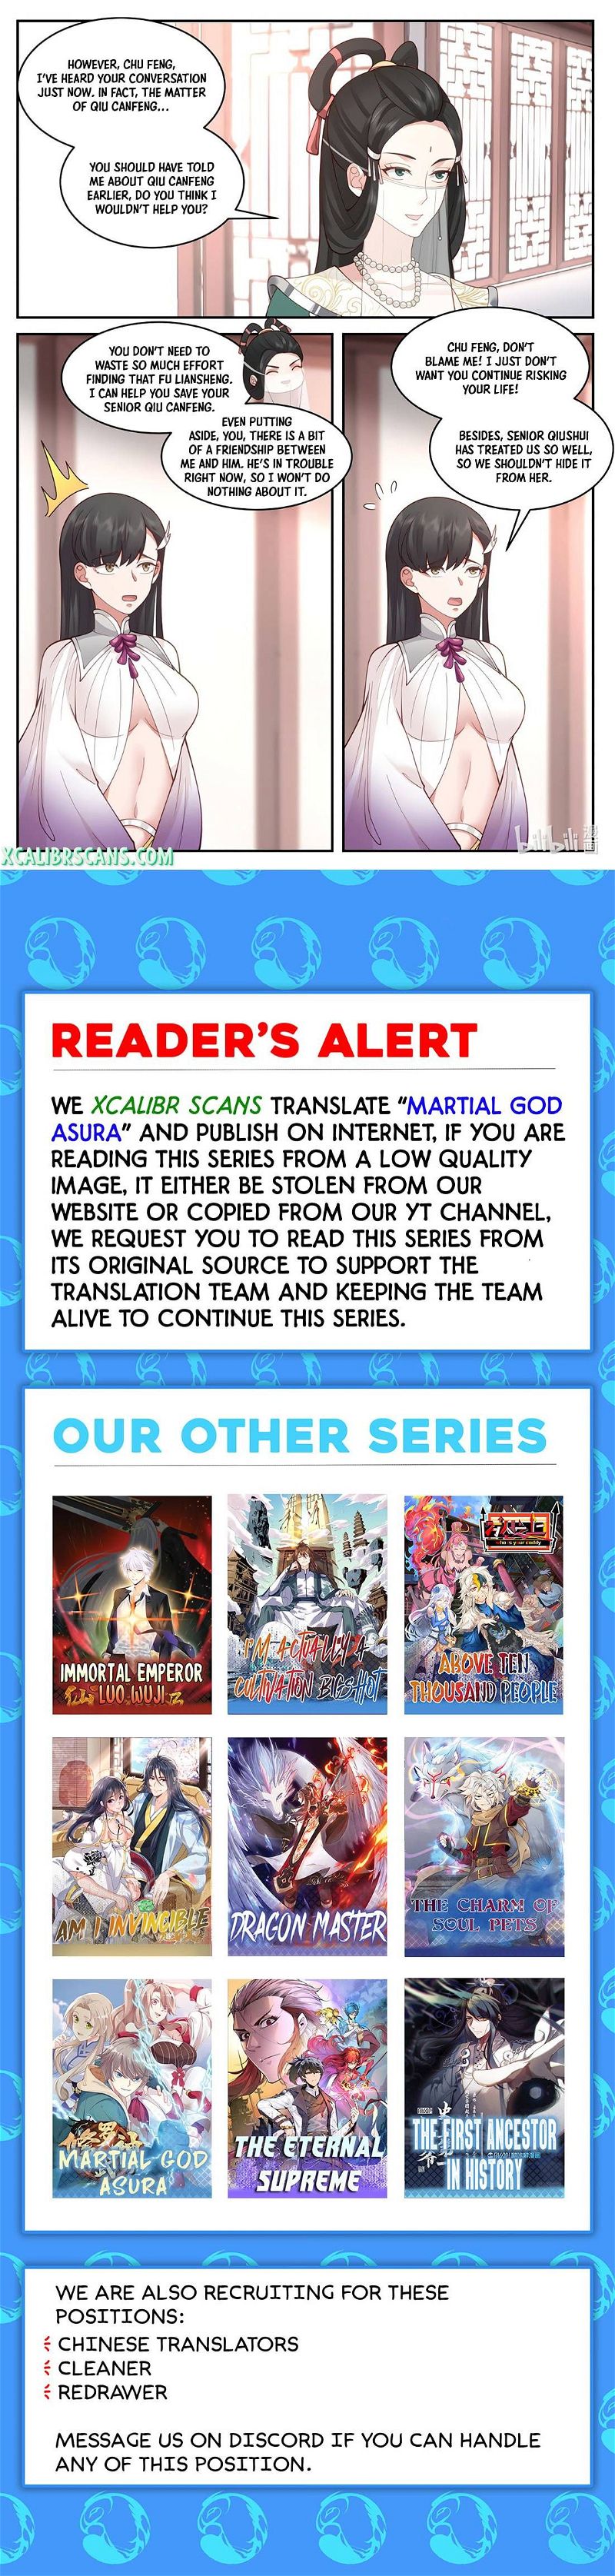 Martial God Asura Chapter 575 page 10